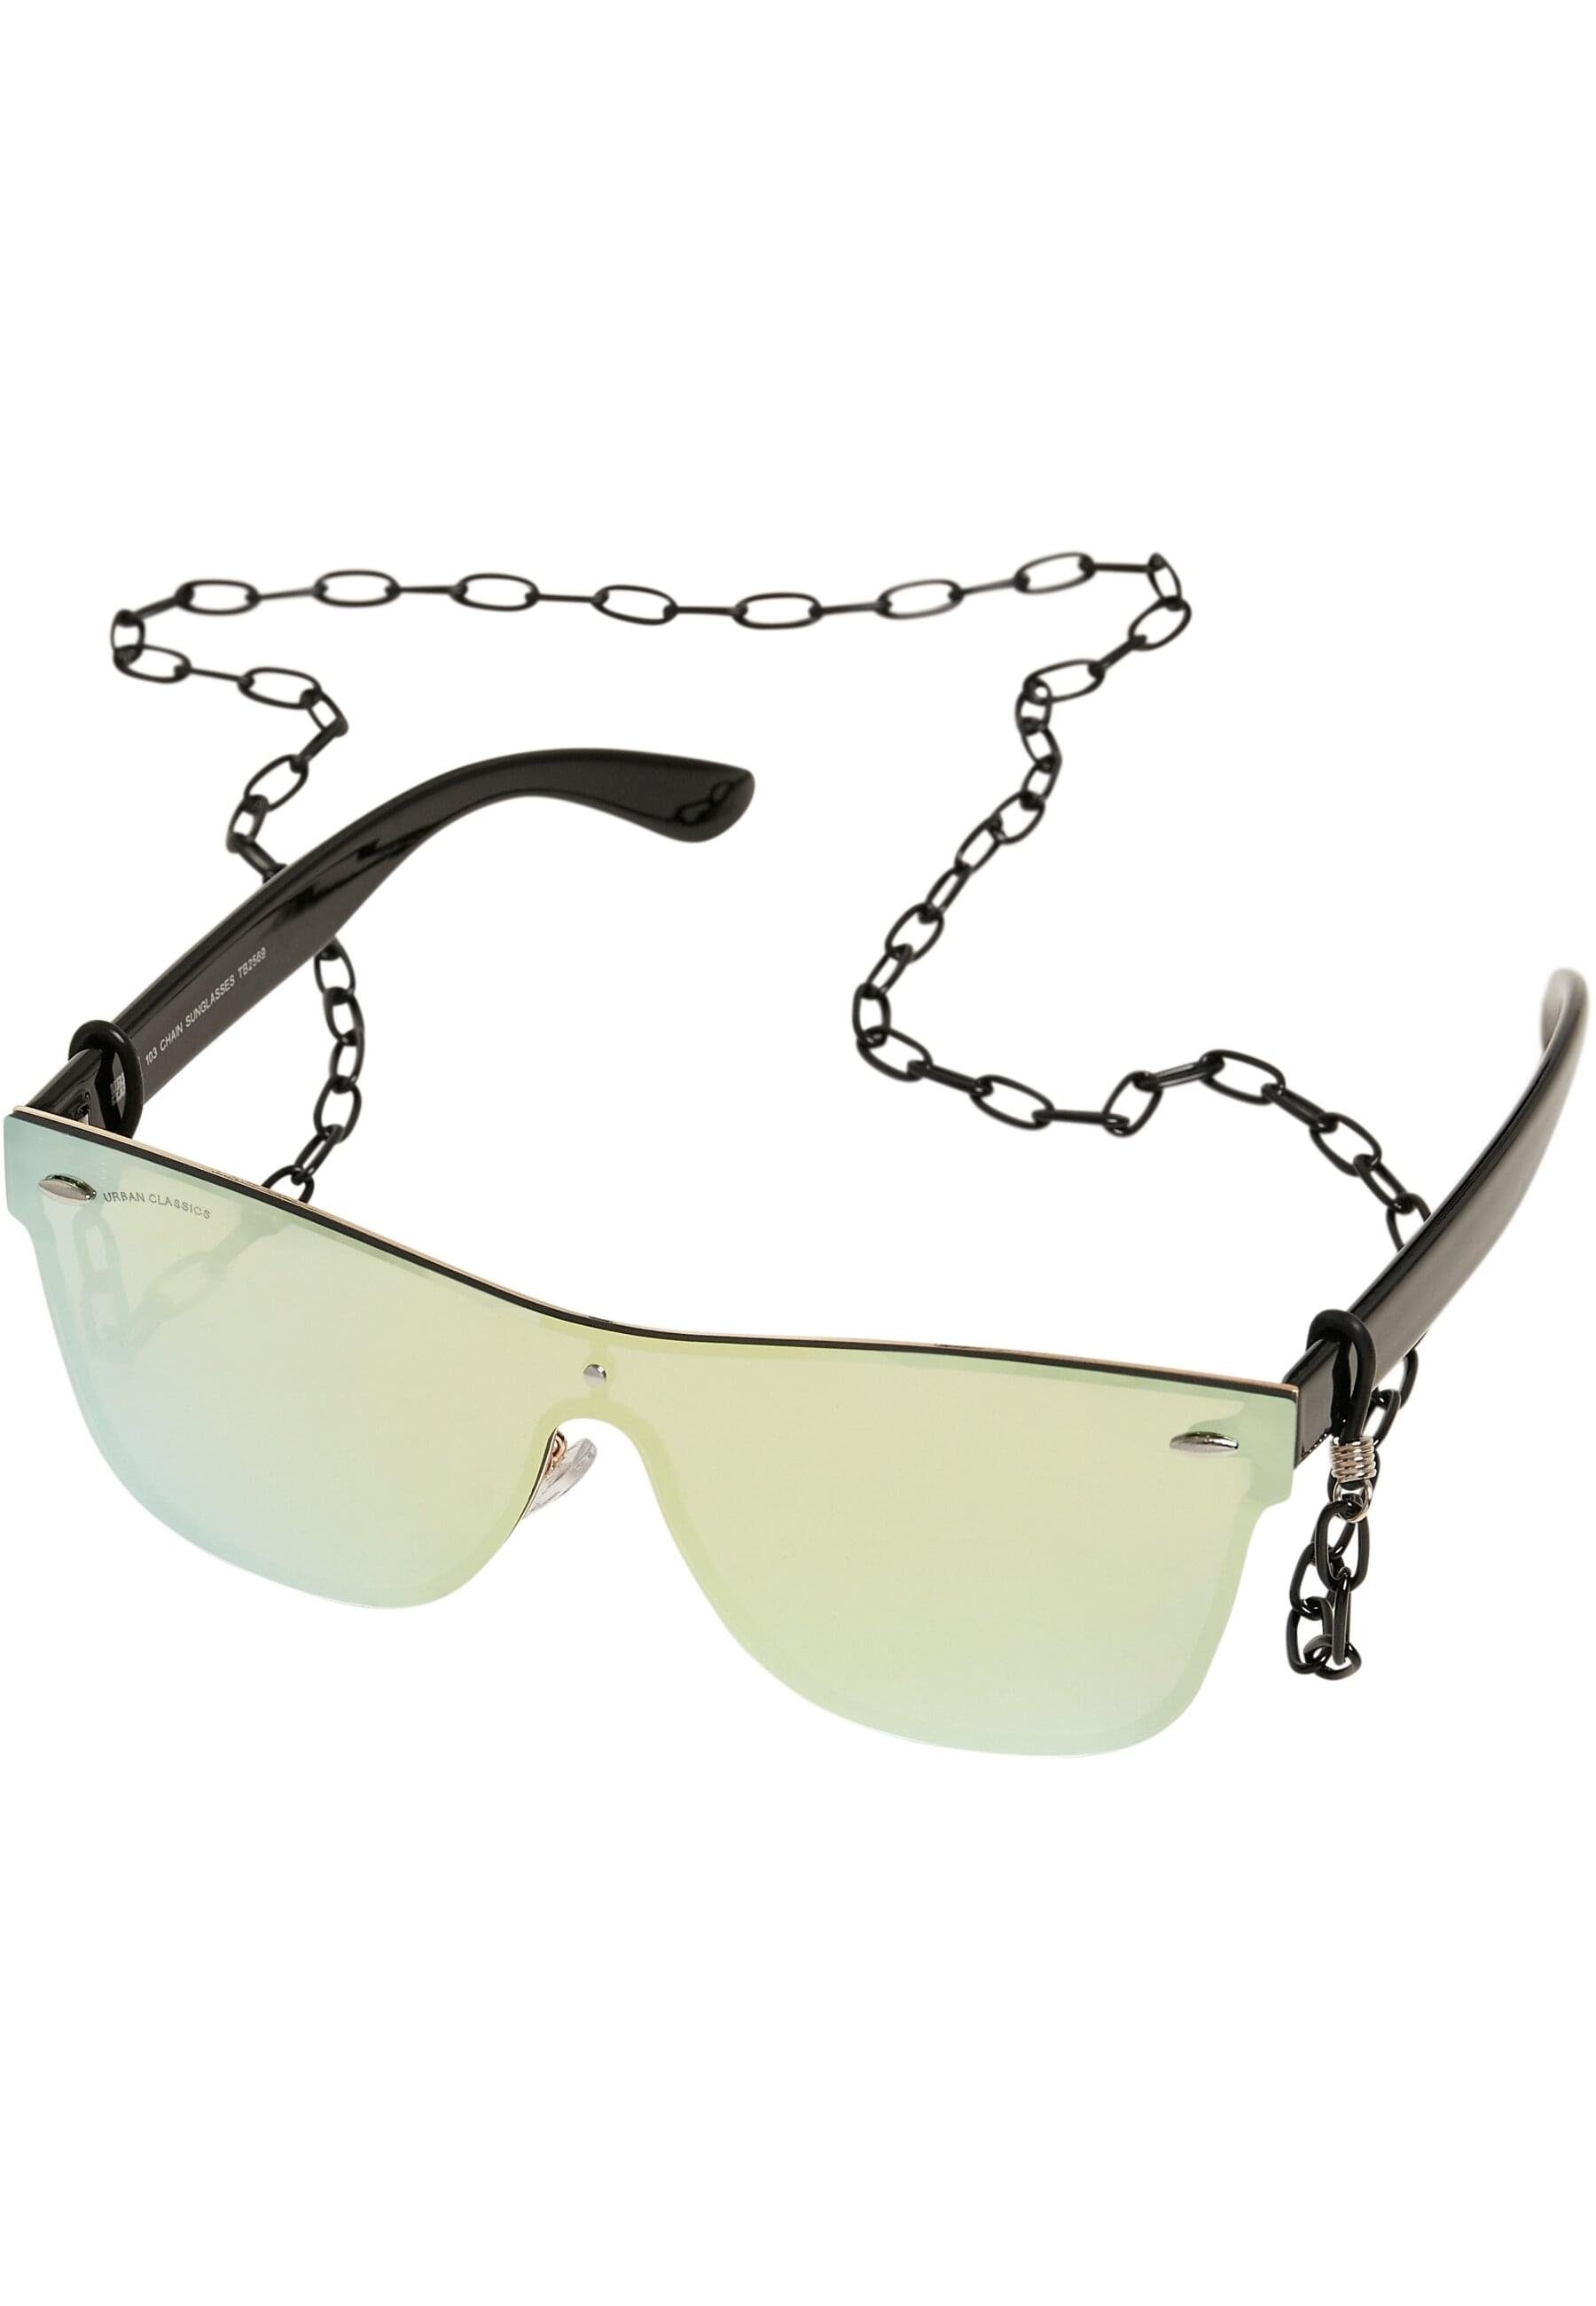 URBAN CLASSICS Sonnenbrille Chain 103 Sunglasses black/gold mirror Unisex